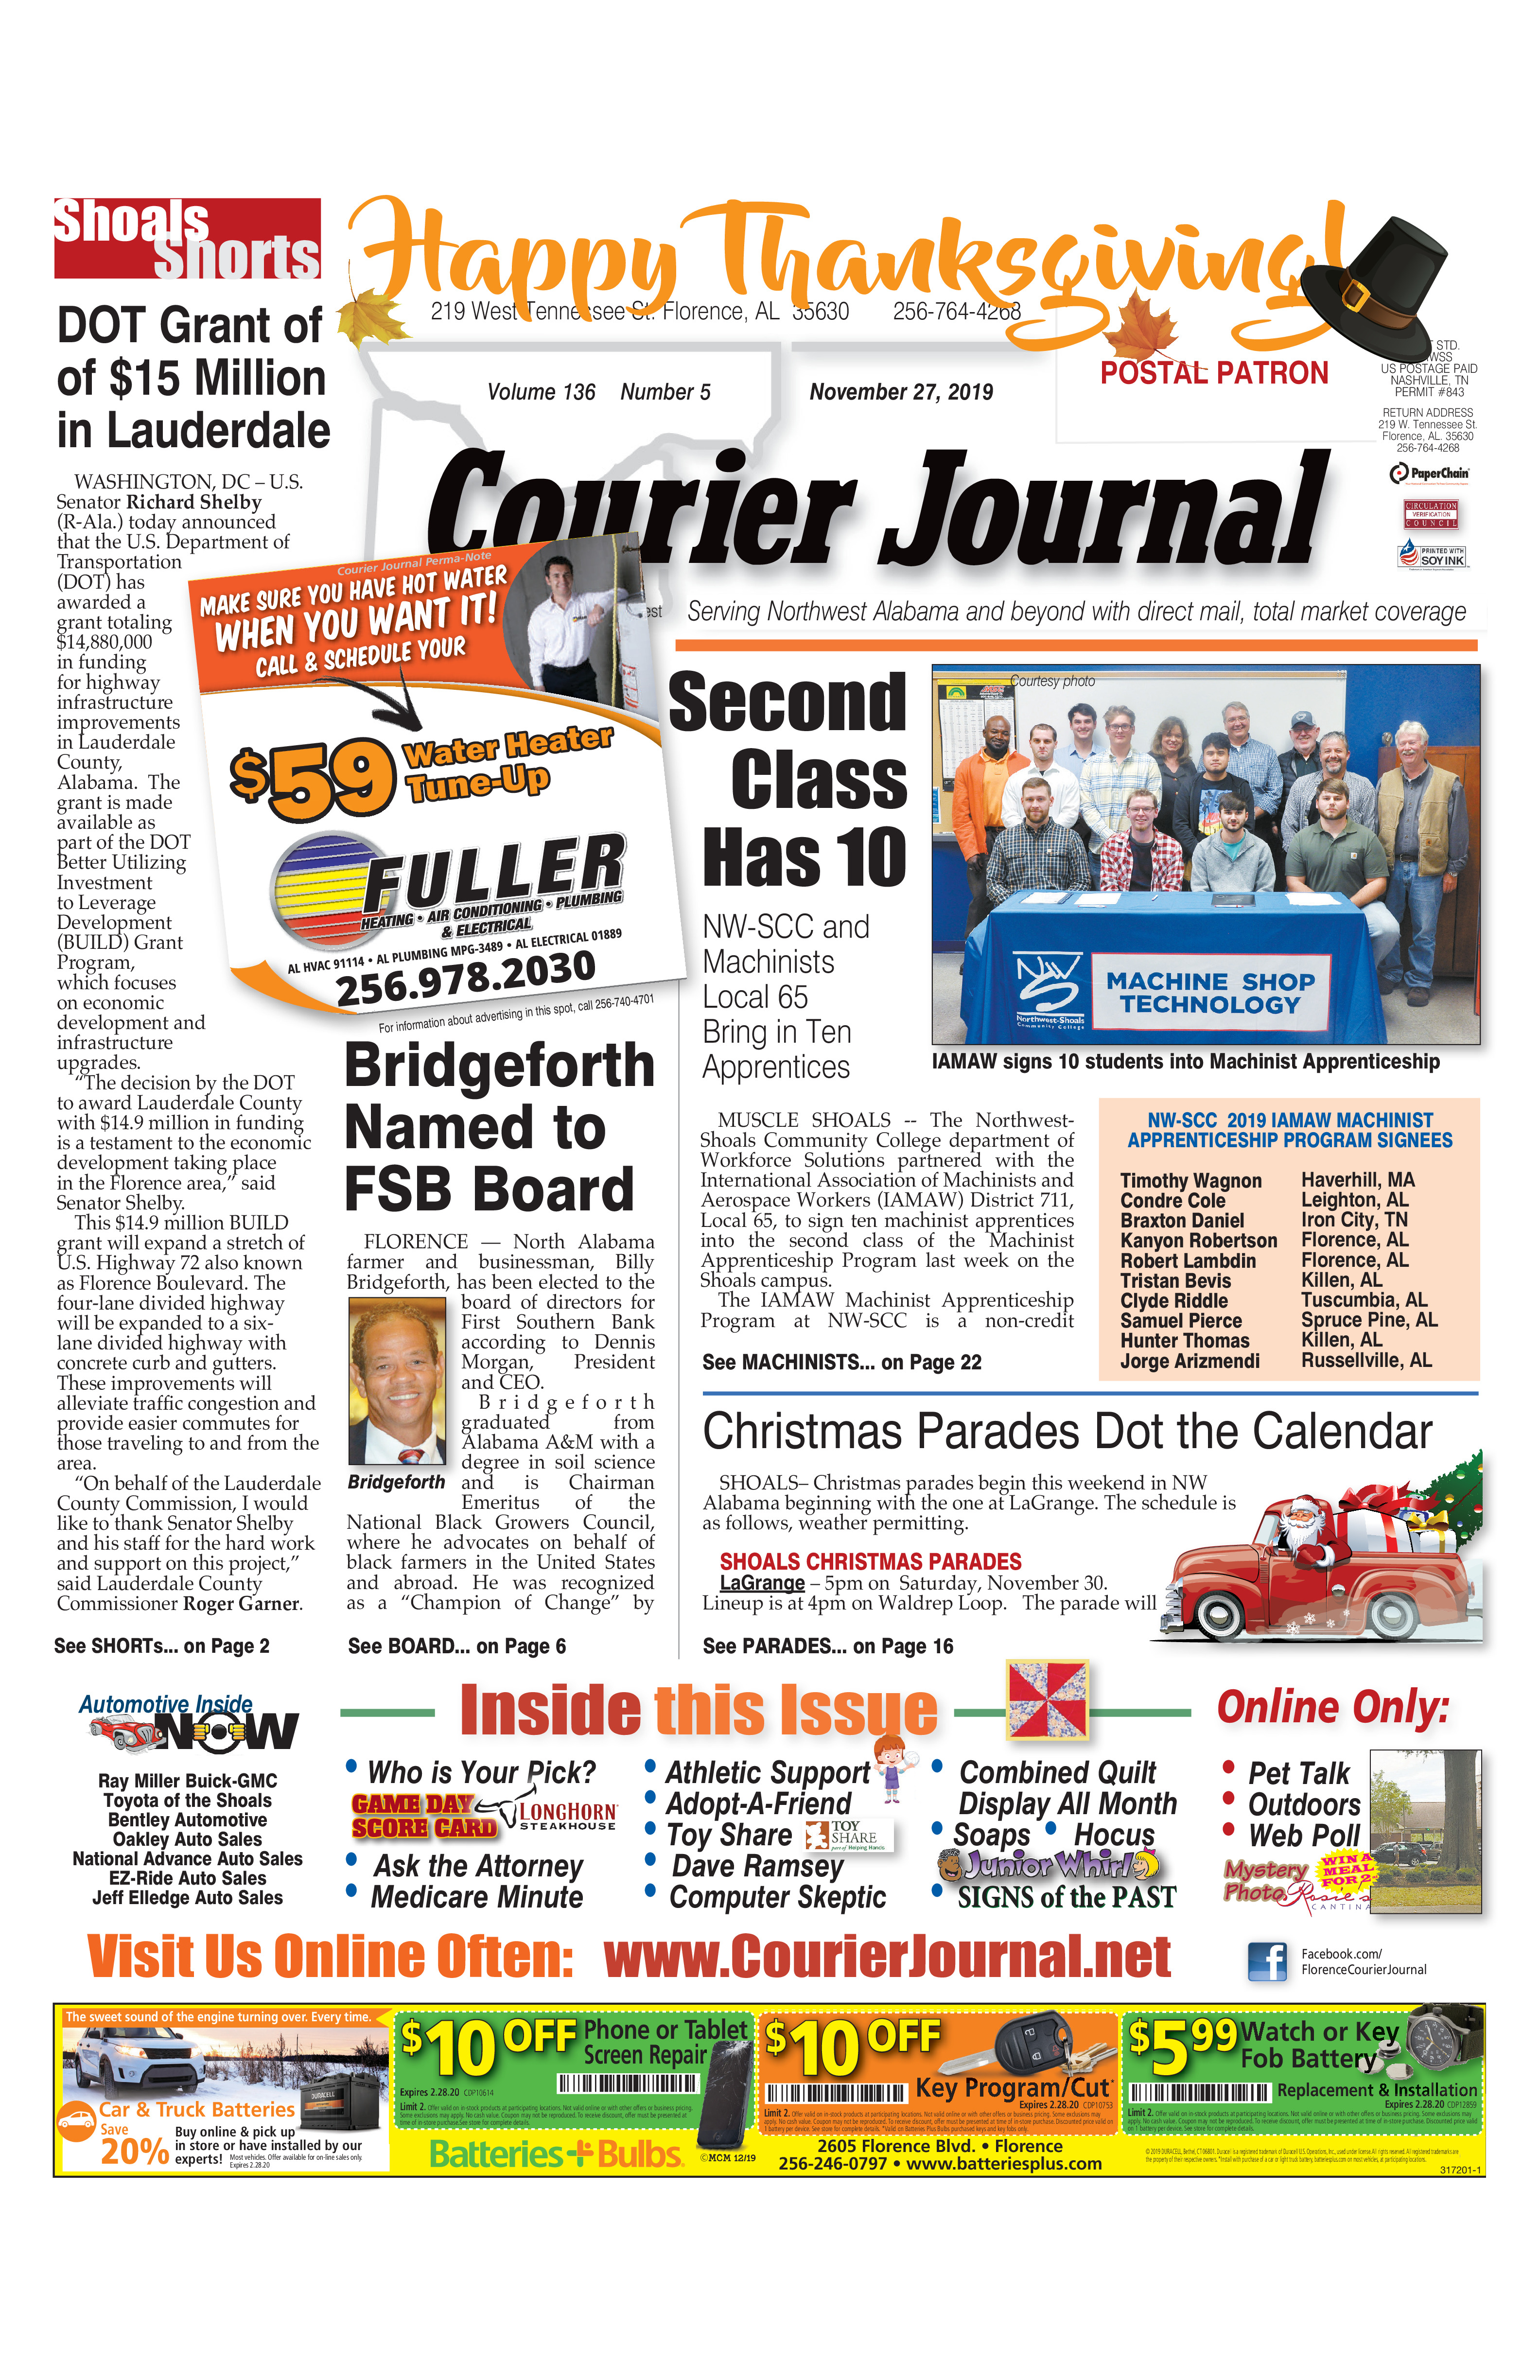 Courier journal classifieds jobs